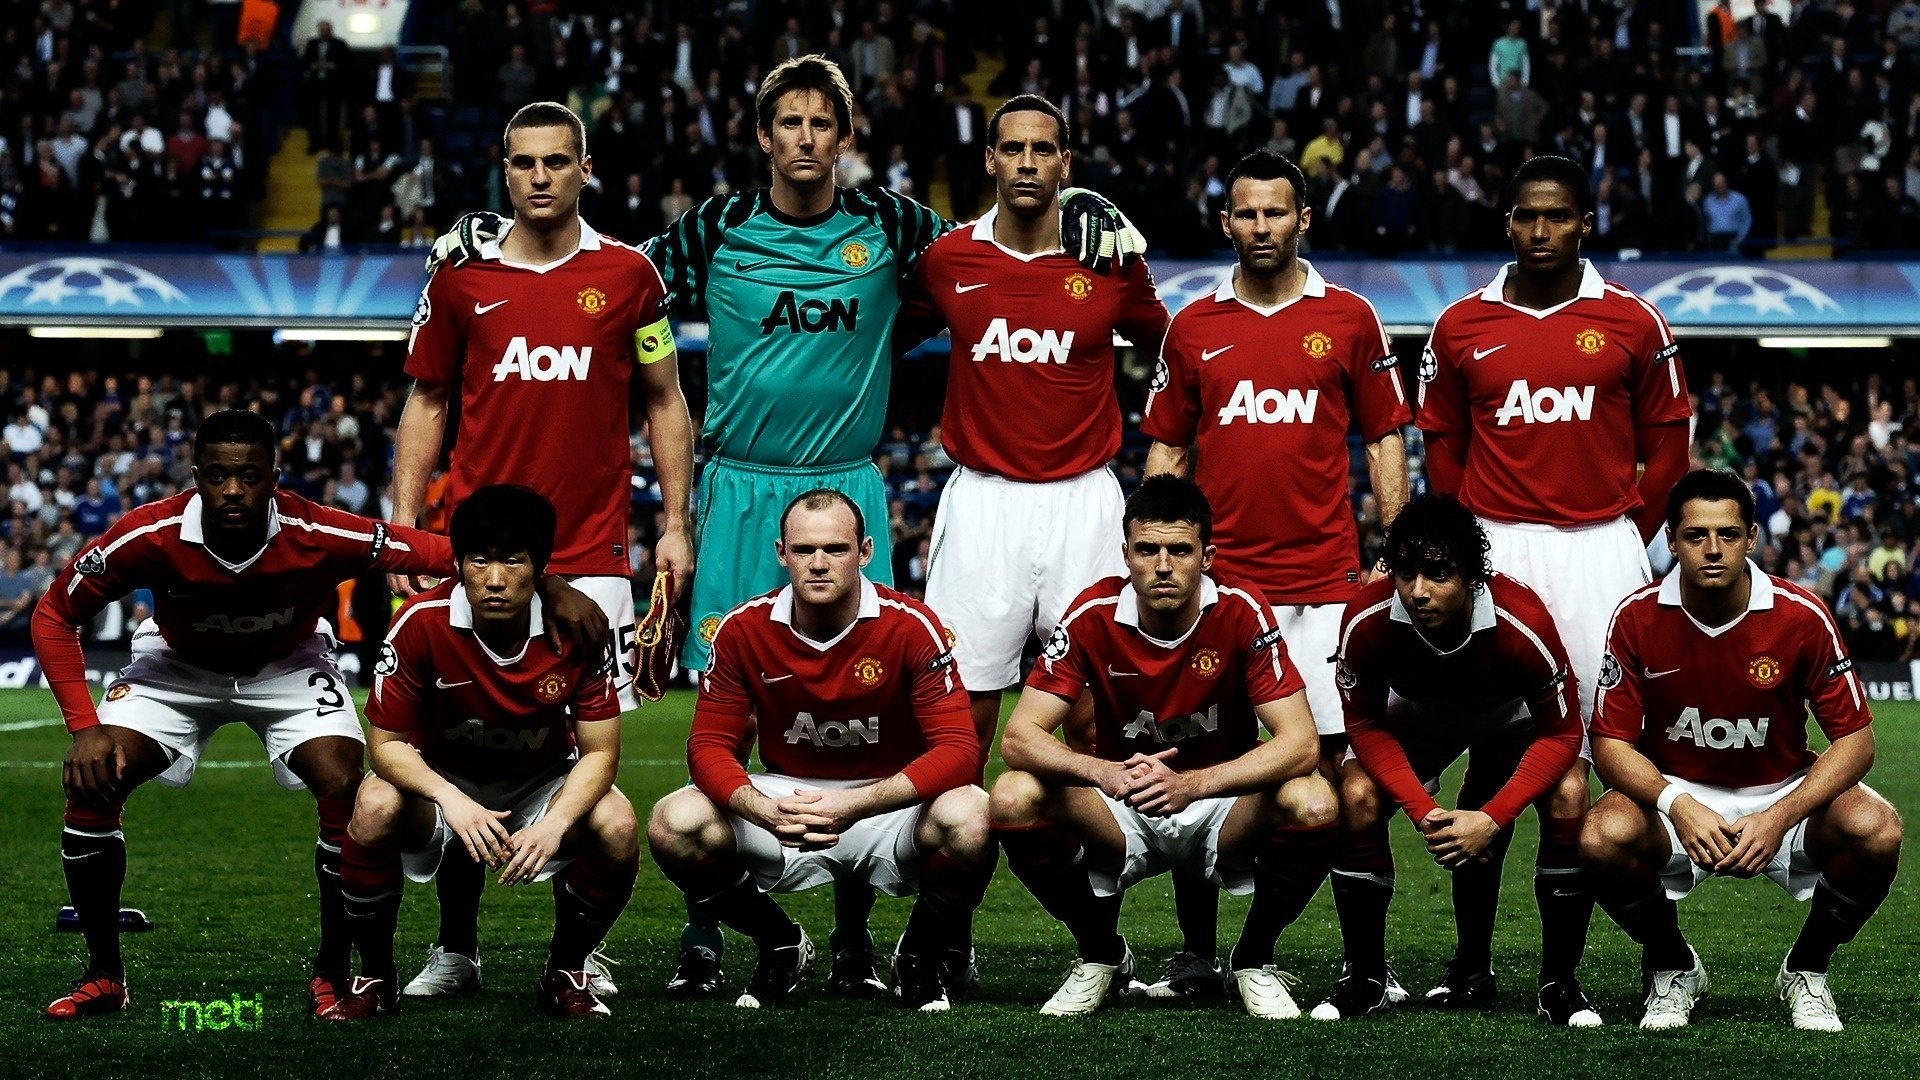 Football is a team game. Манчестер Юнайтед команда 2008. Футбольная команда Манчестер Юнайтед. Команда Манчестер Юнайтед. Манчестер Юнайтед командное фото 2008.